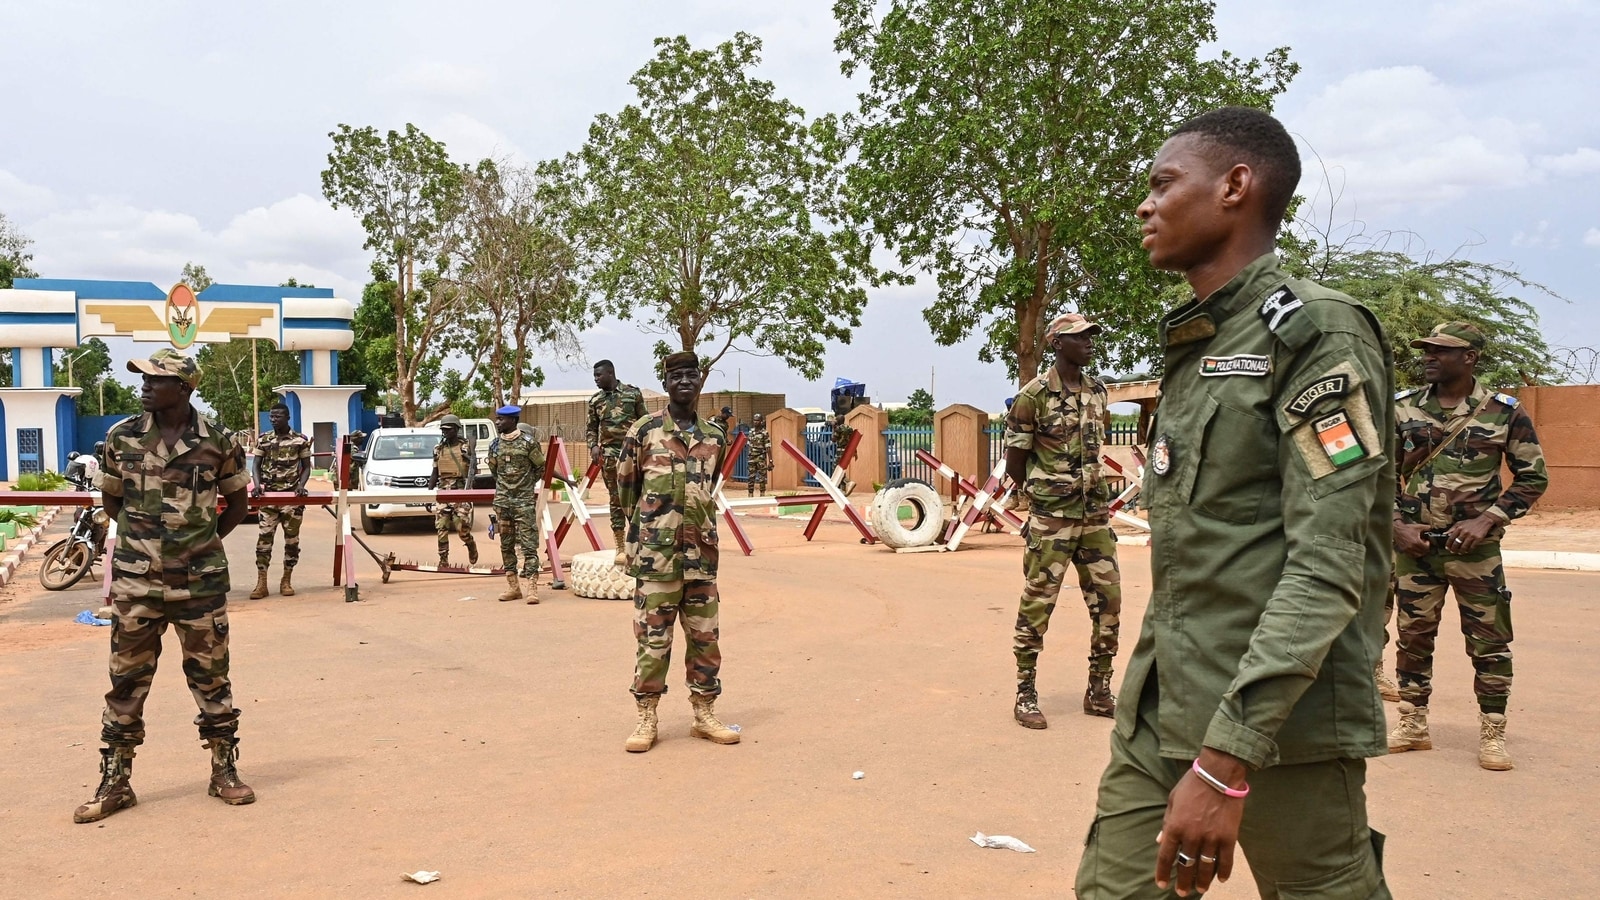 Niger military regime leader ‘open to consider diplomatic solution’: Mediators